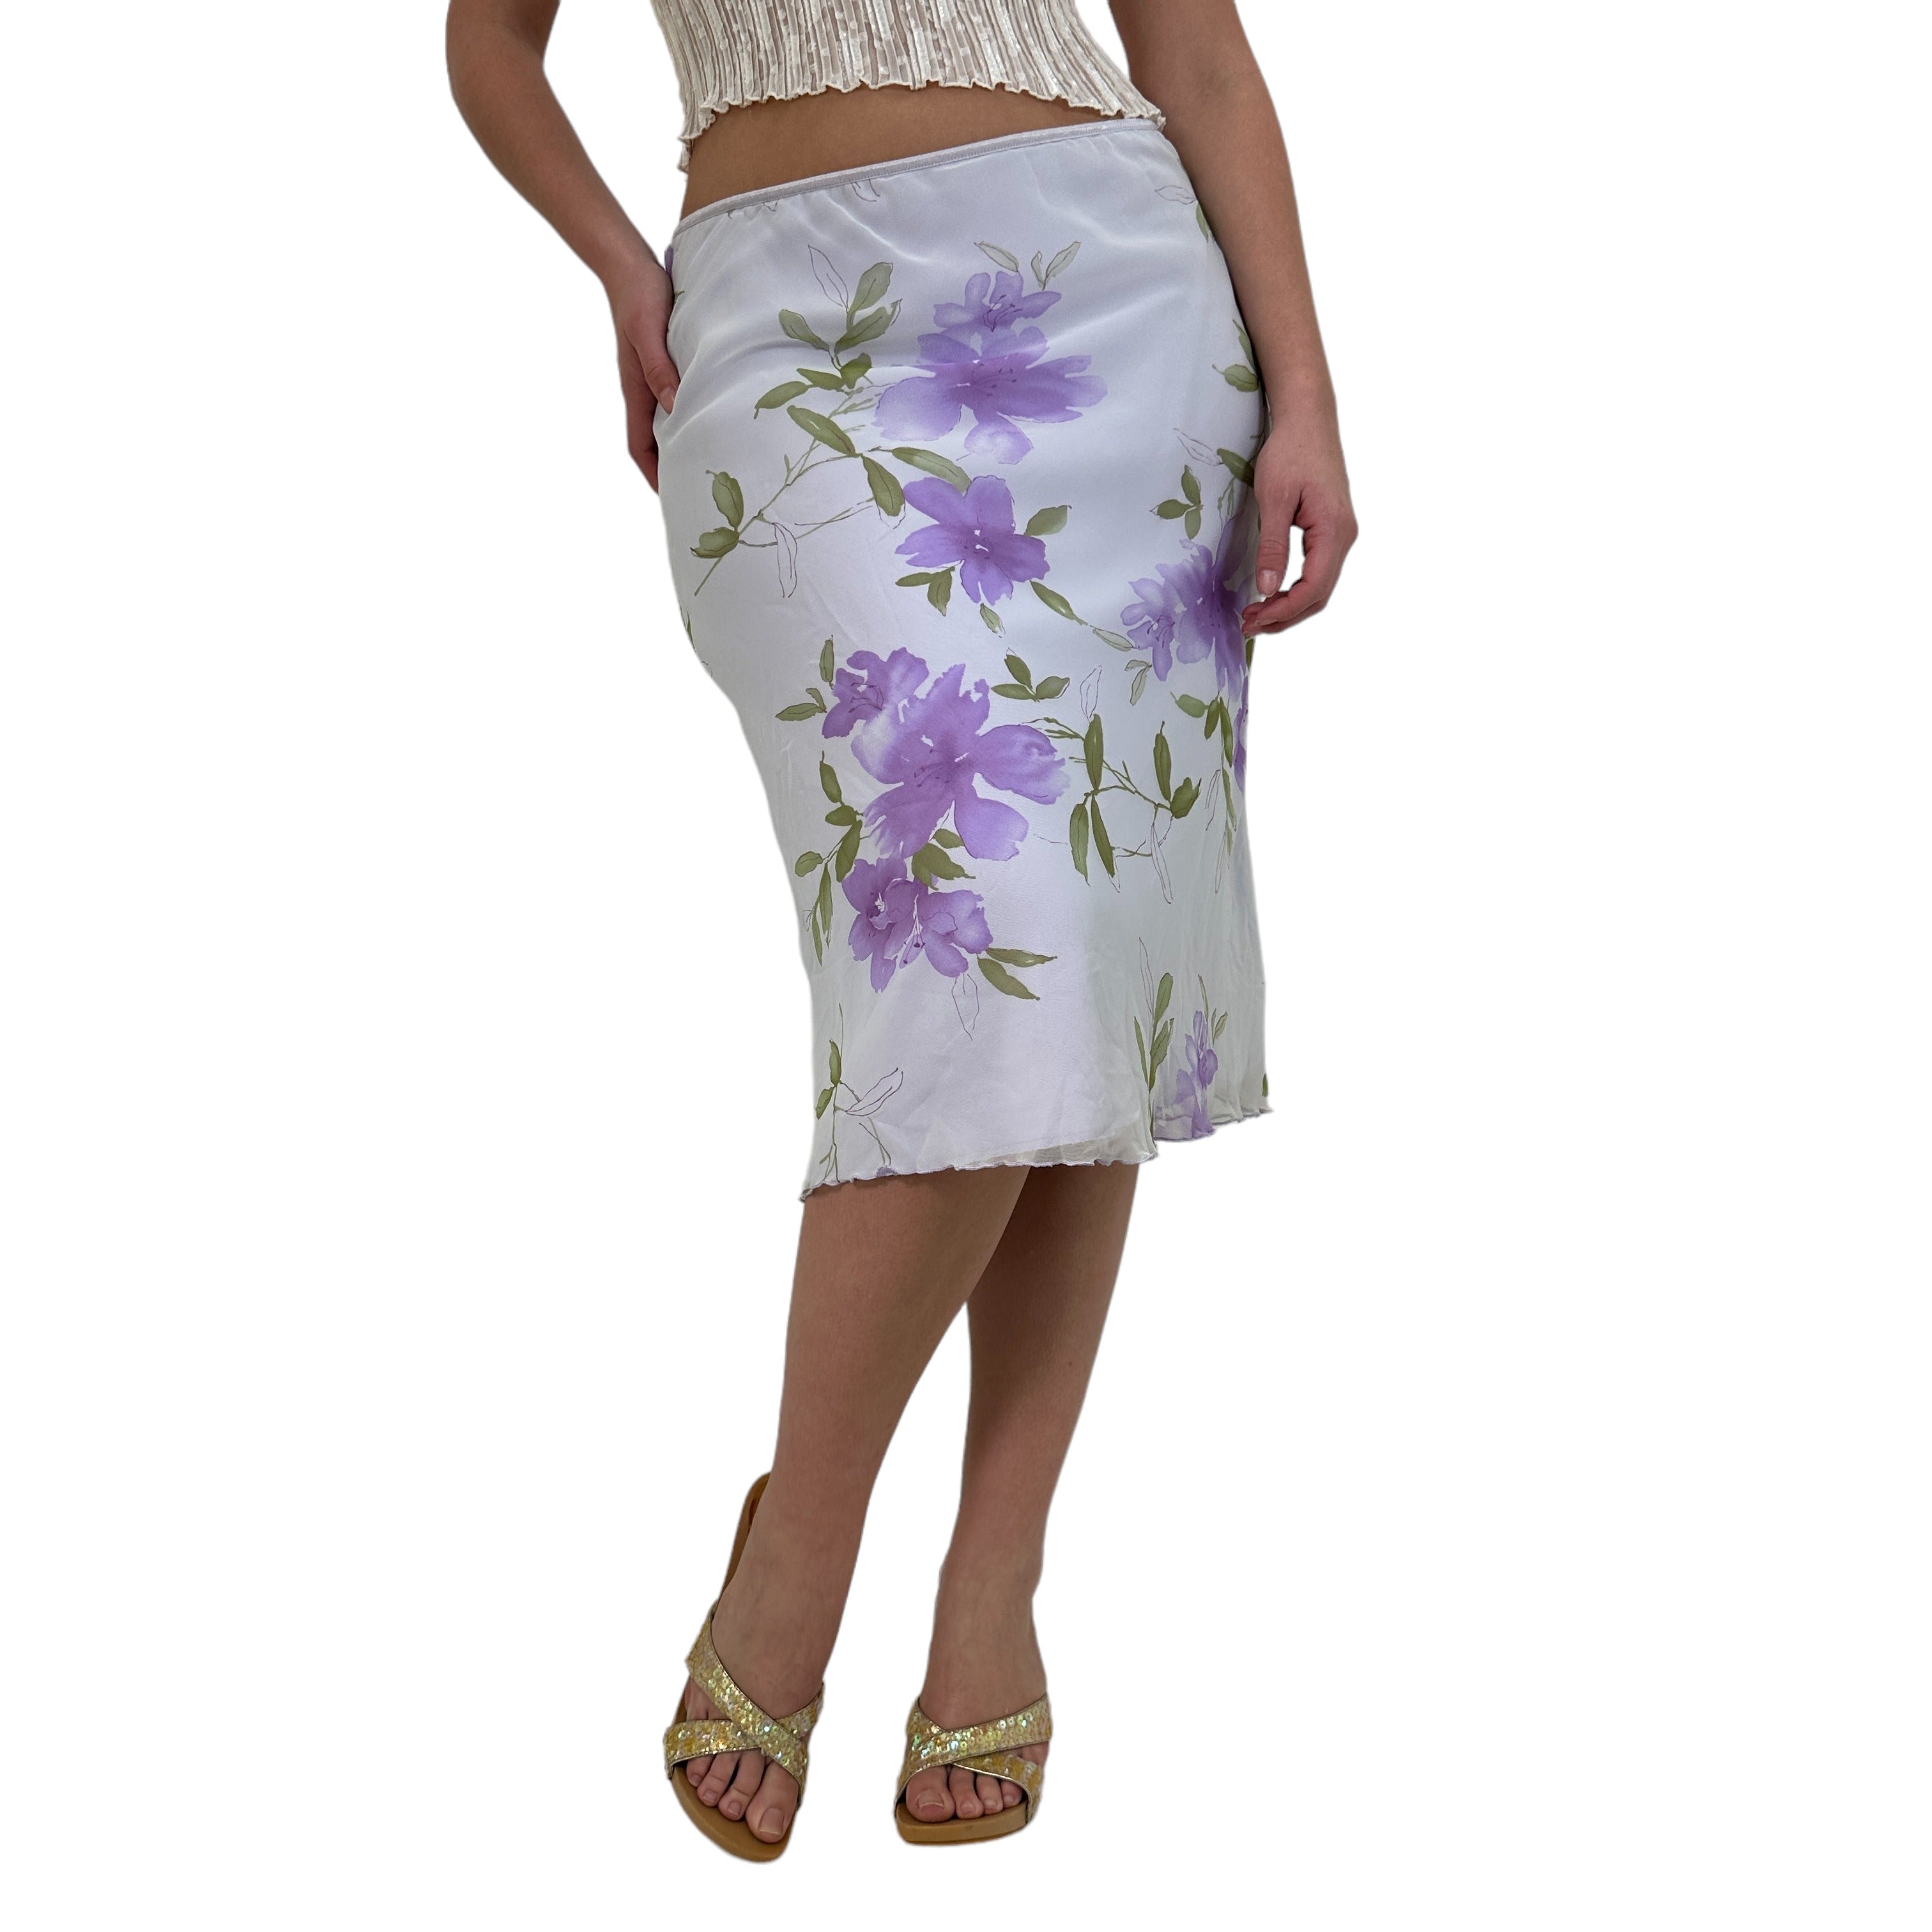 Y2k Vintage White + Purple Floral Skirt [S, M]